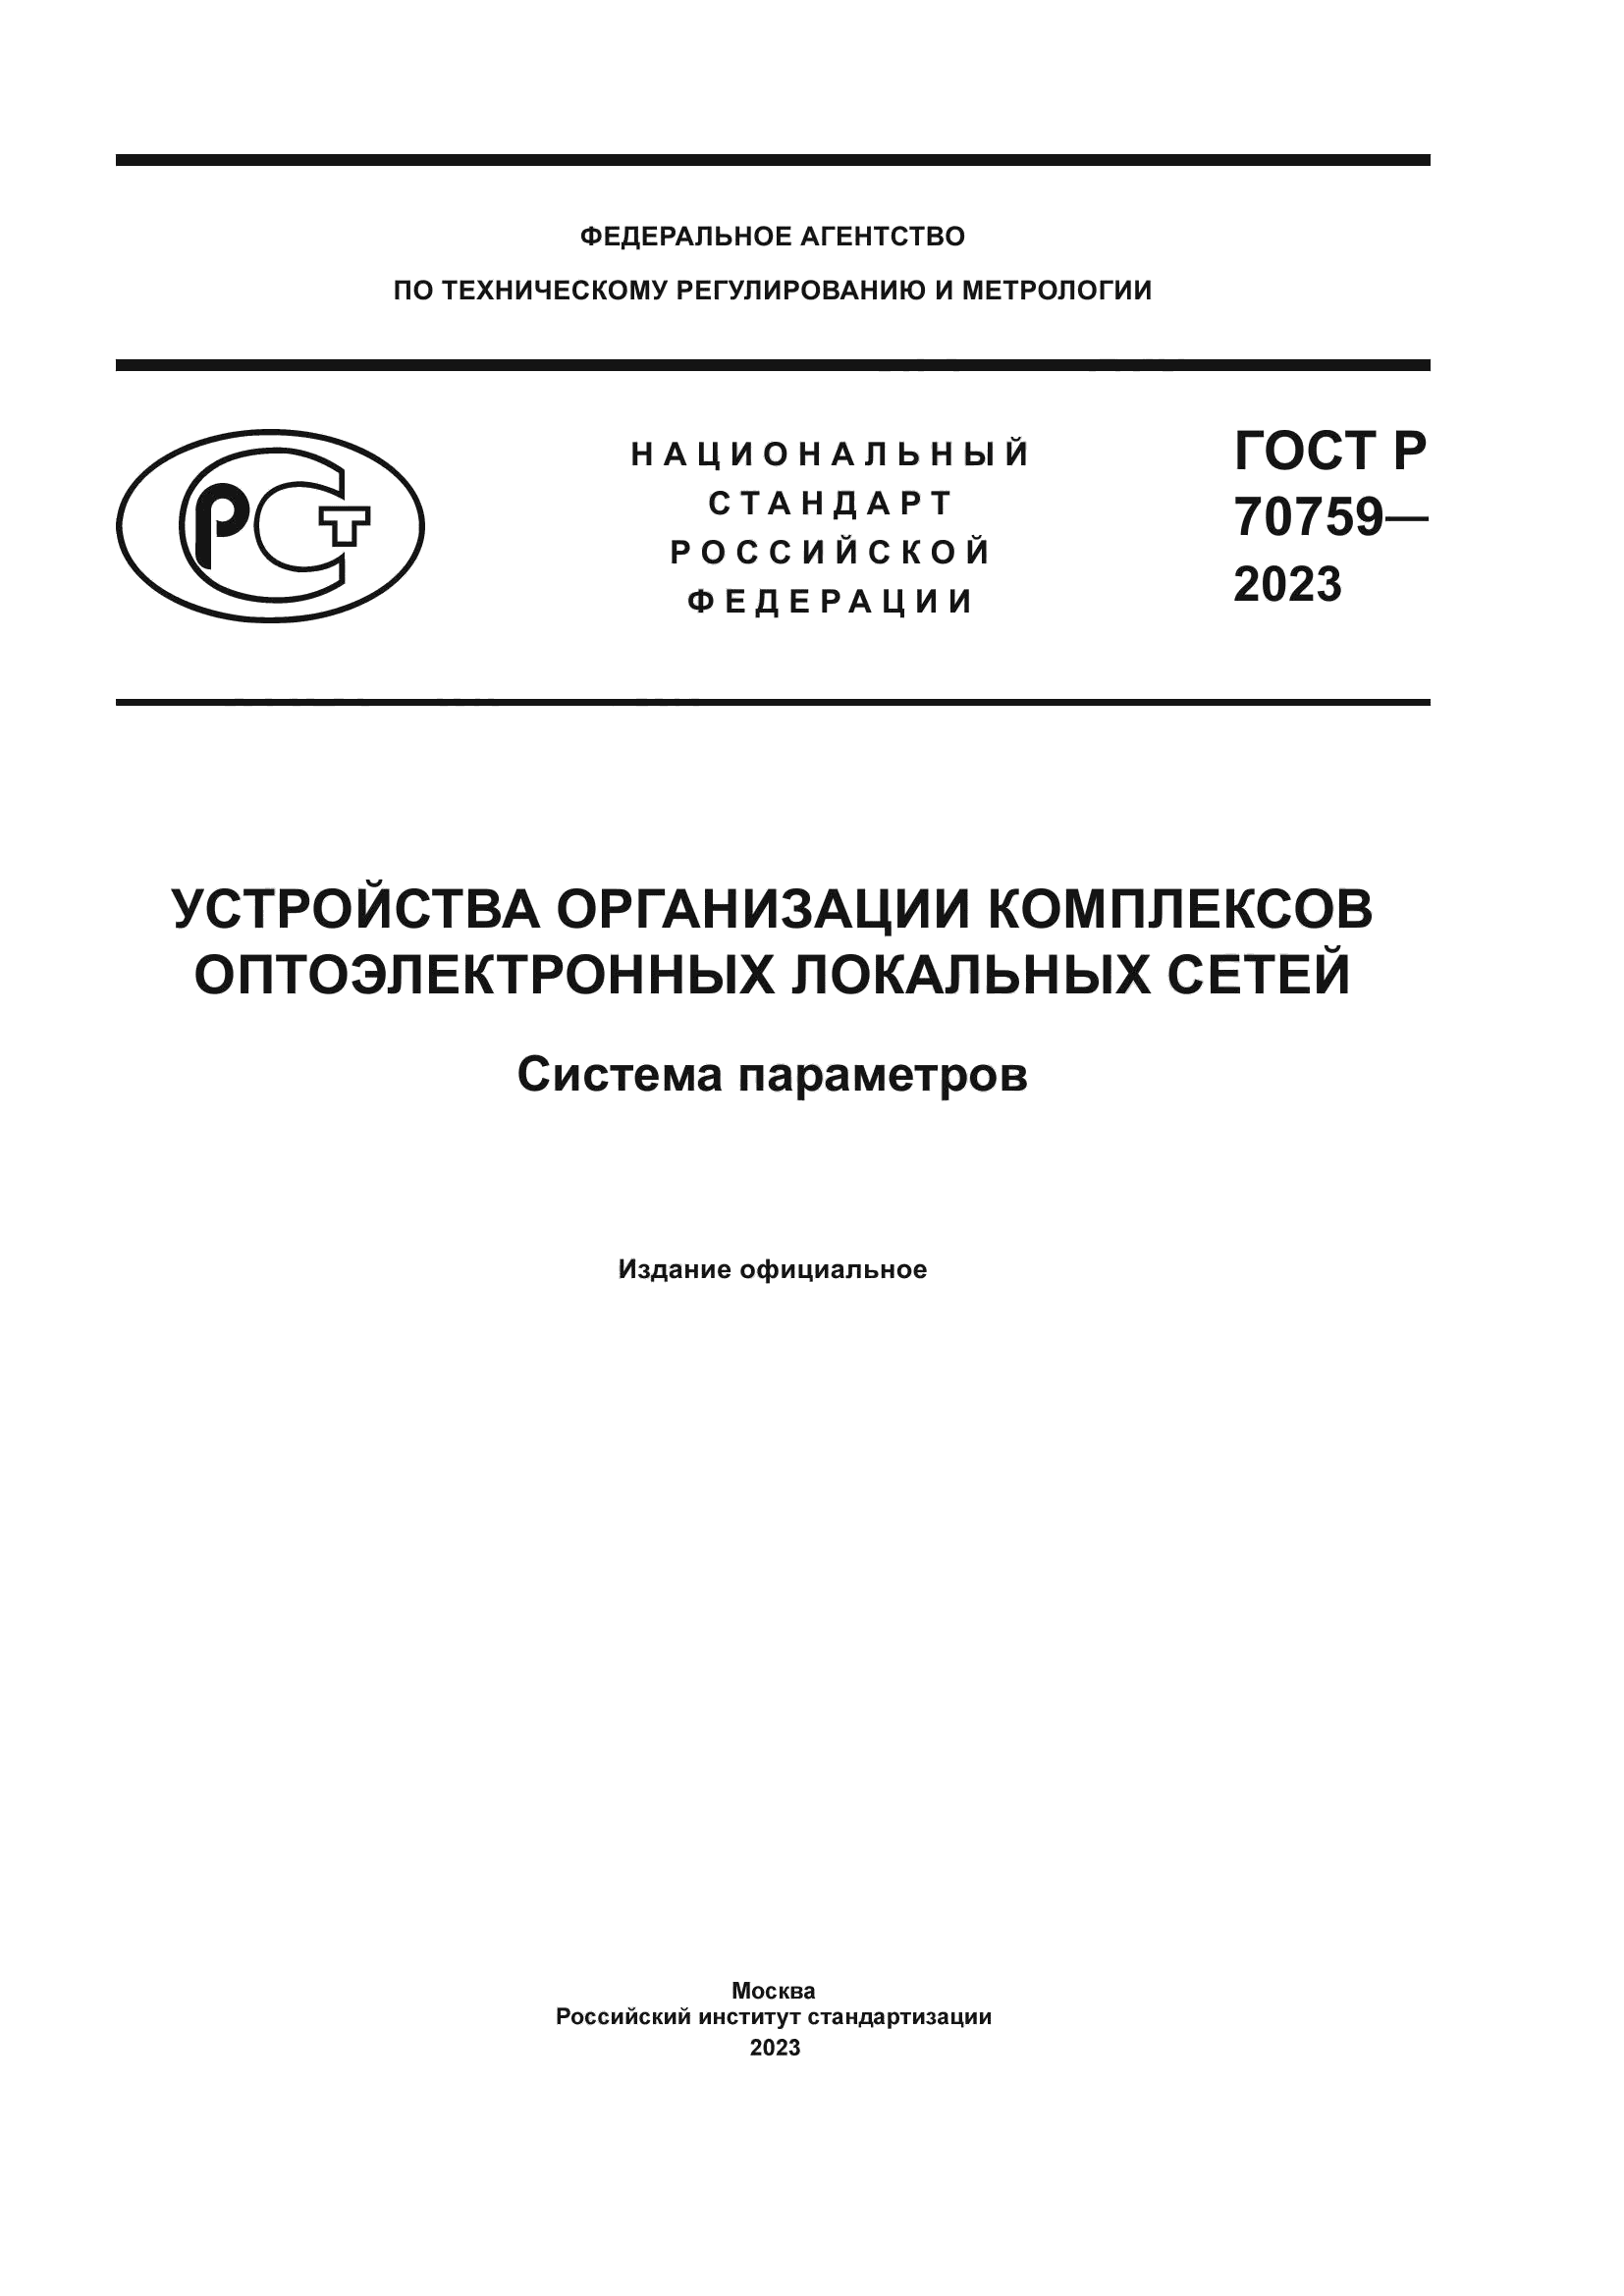 ГОСТ Р 70759-2023